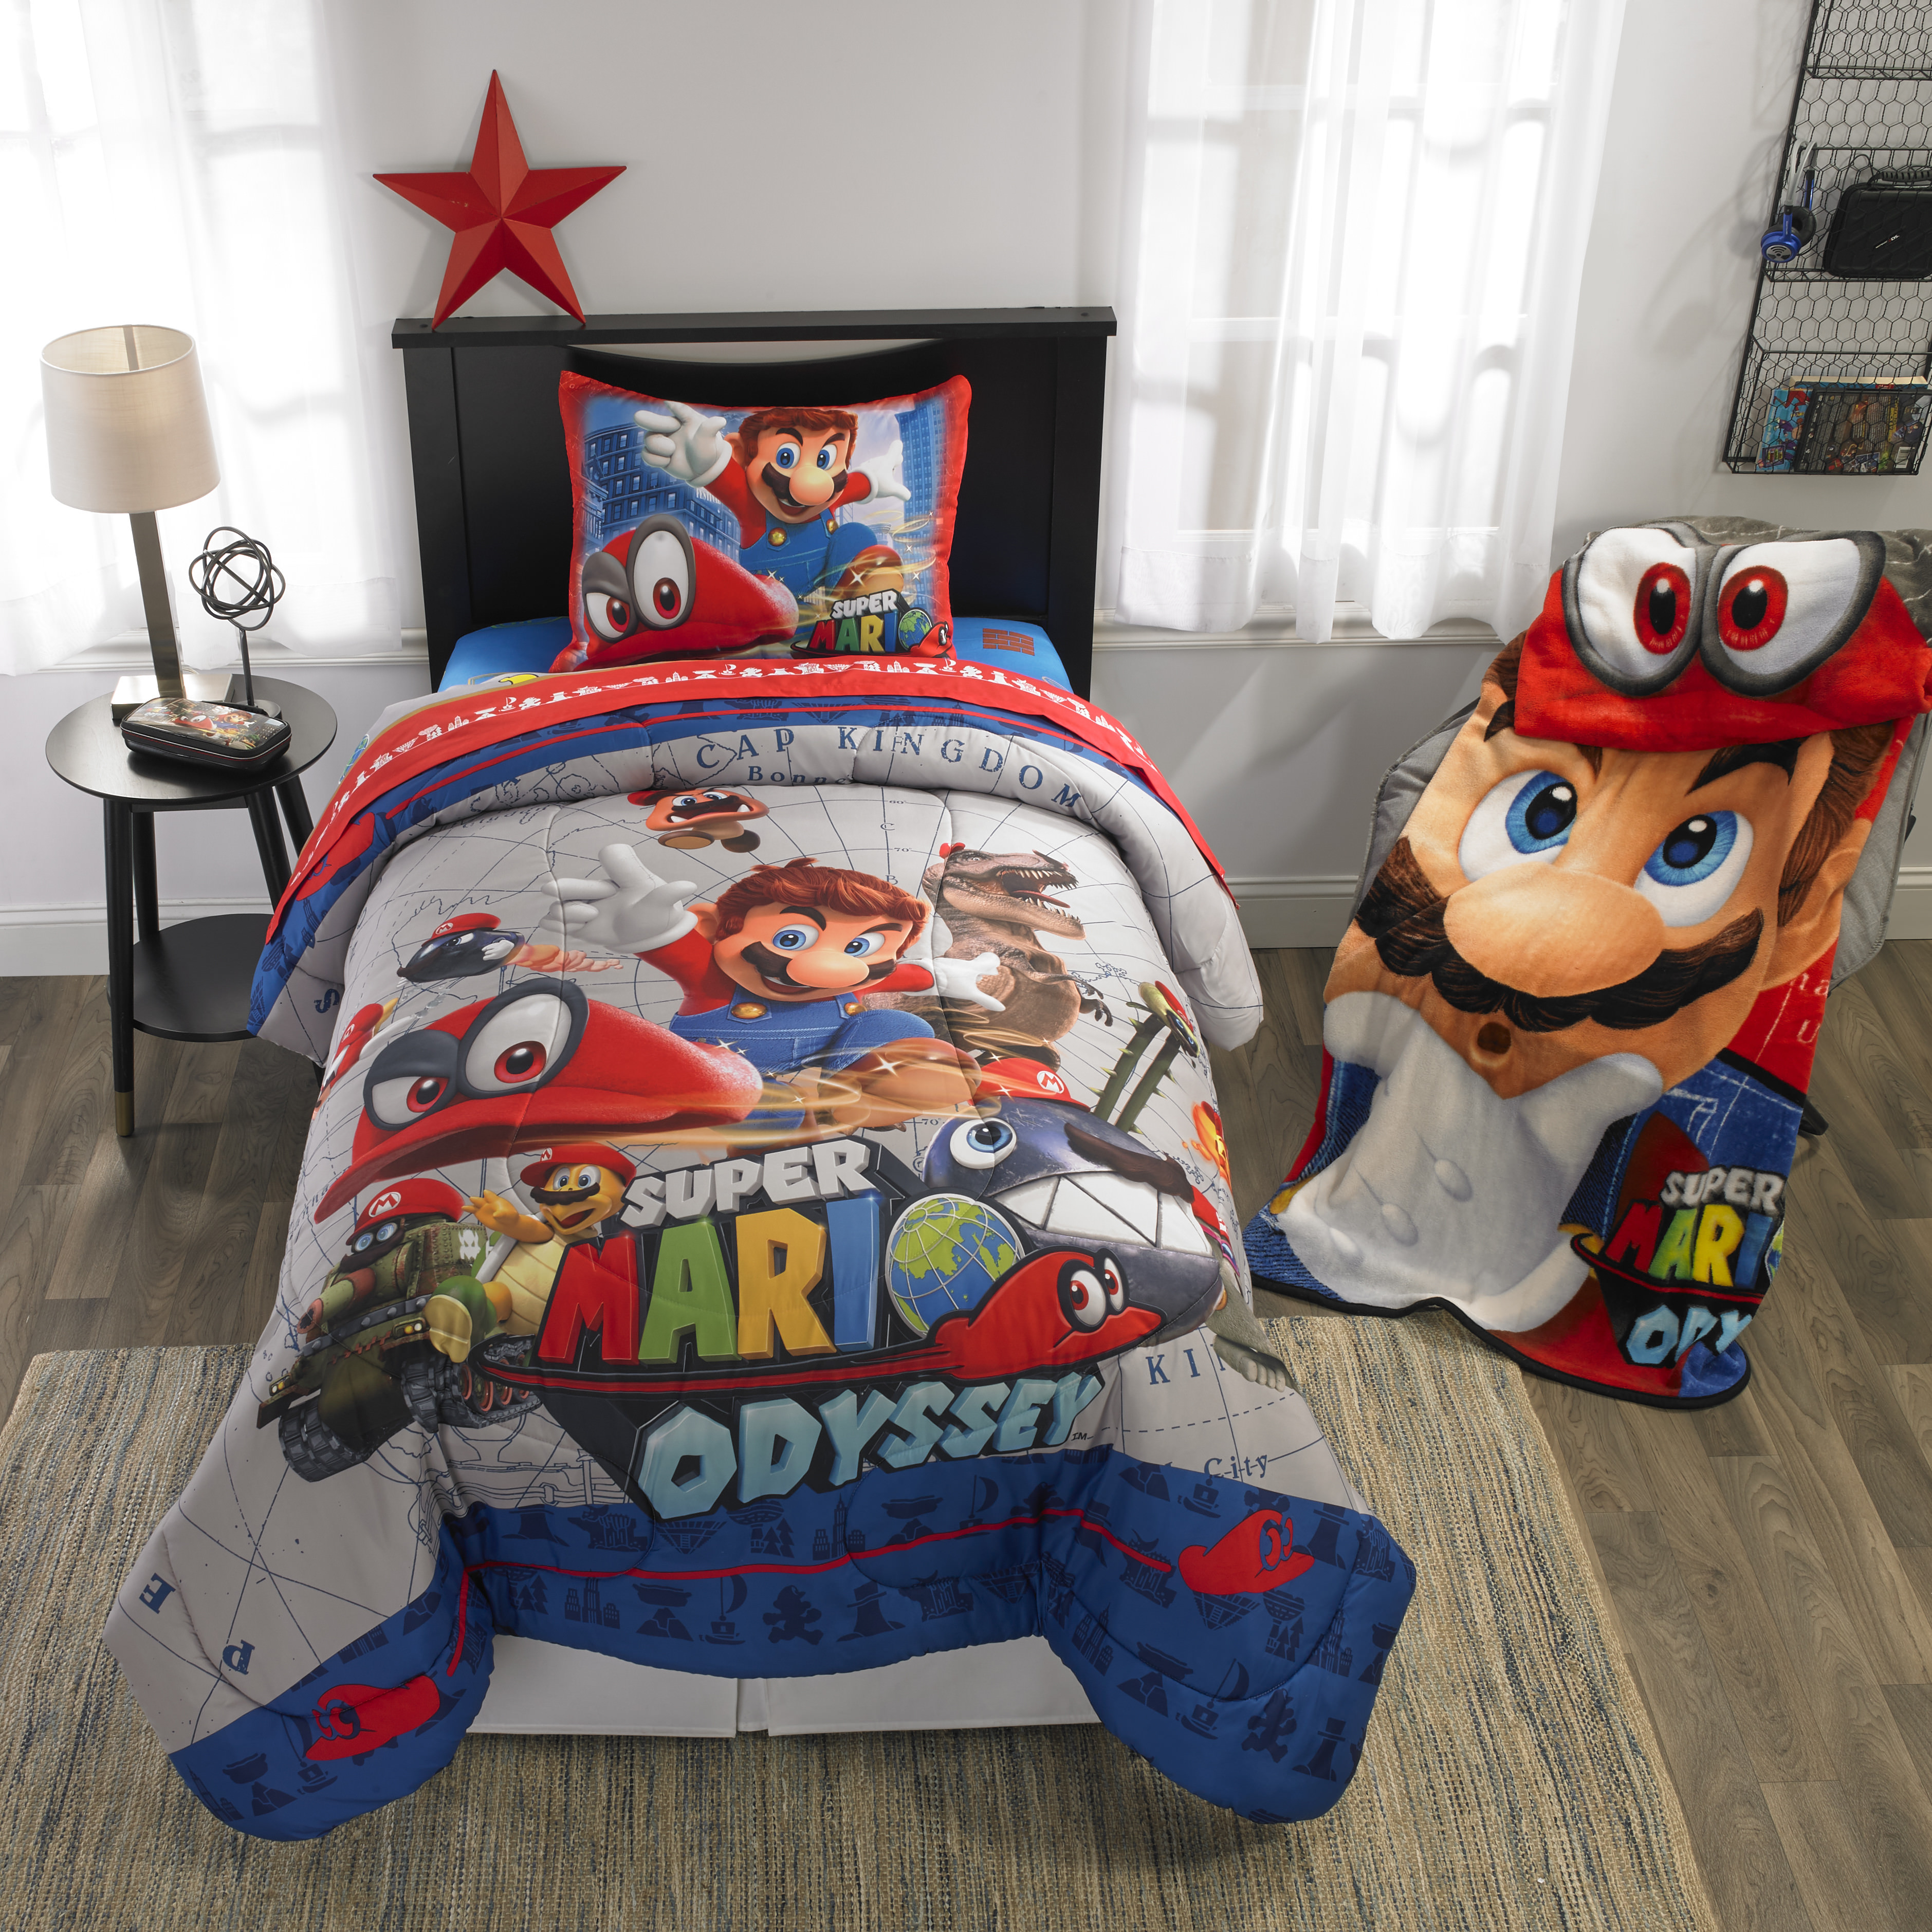 Super Mario Odyssey Bedding - HD Wallpaper 